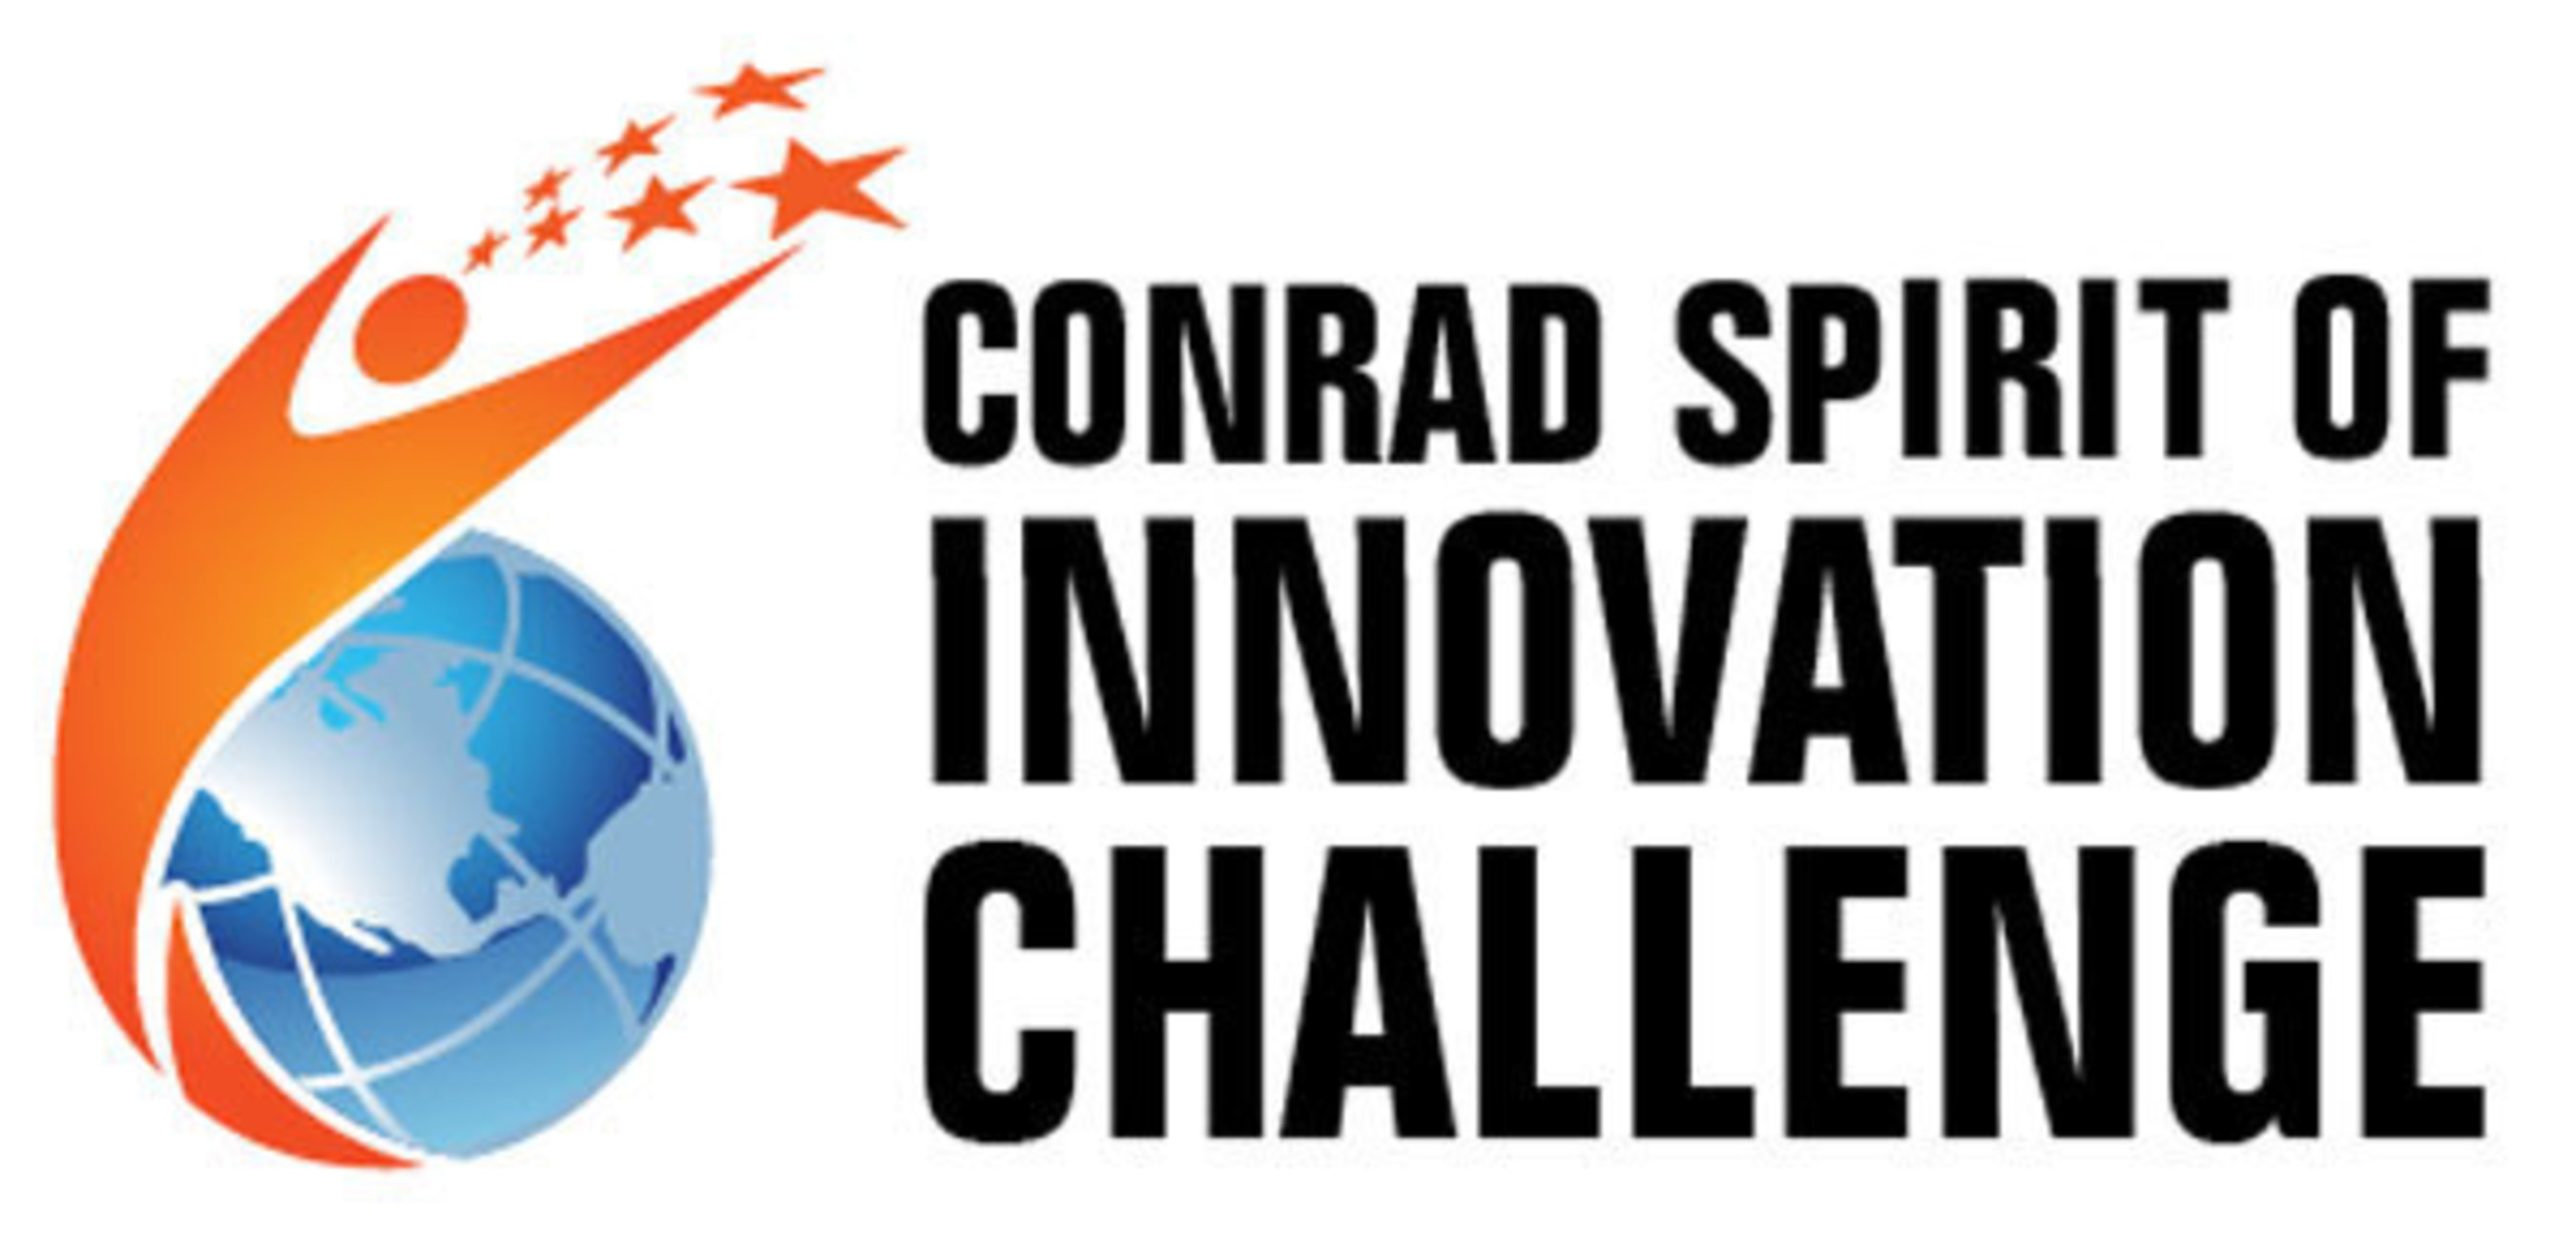 Conrad Spirit of Innovation Challenge